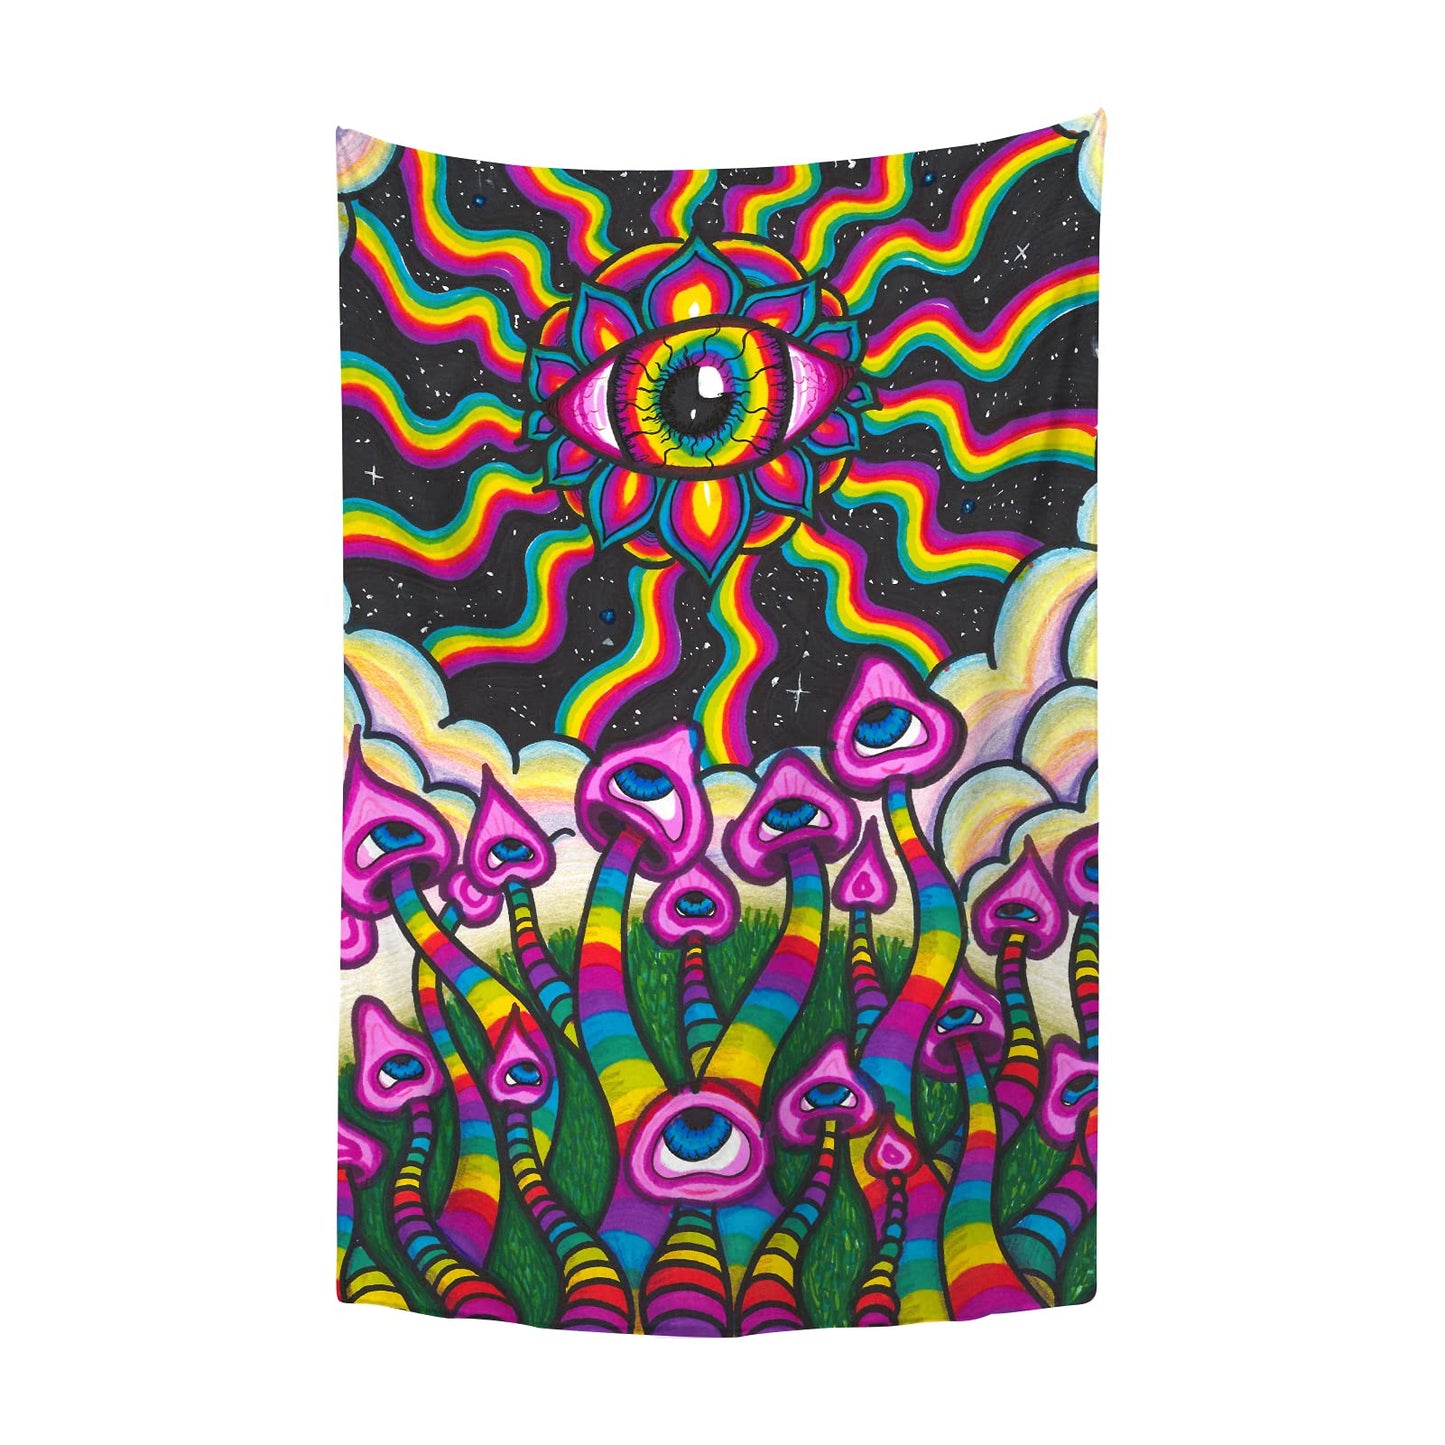 YongColer Art Mushroom Alien Eye Cool Aesthetic Wall Hanging, Trippy Wall Tapestry Hippie for Bedroom Dorm Decor